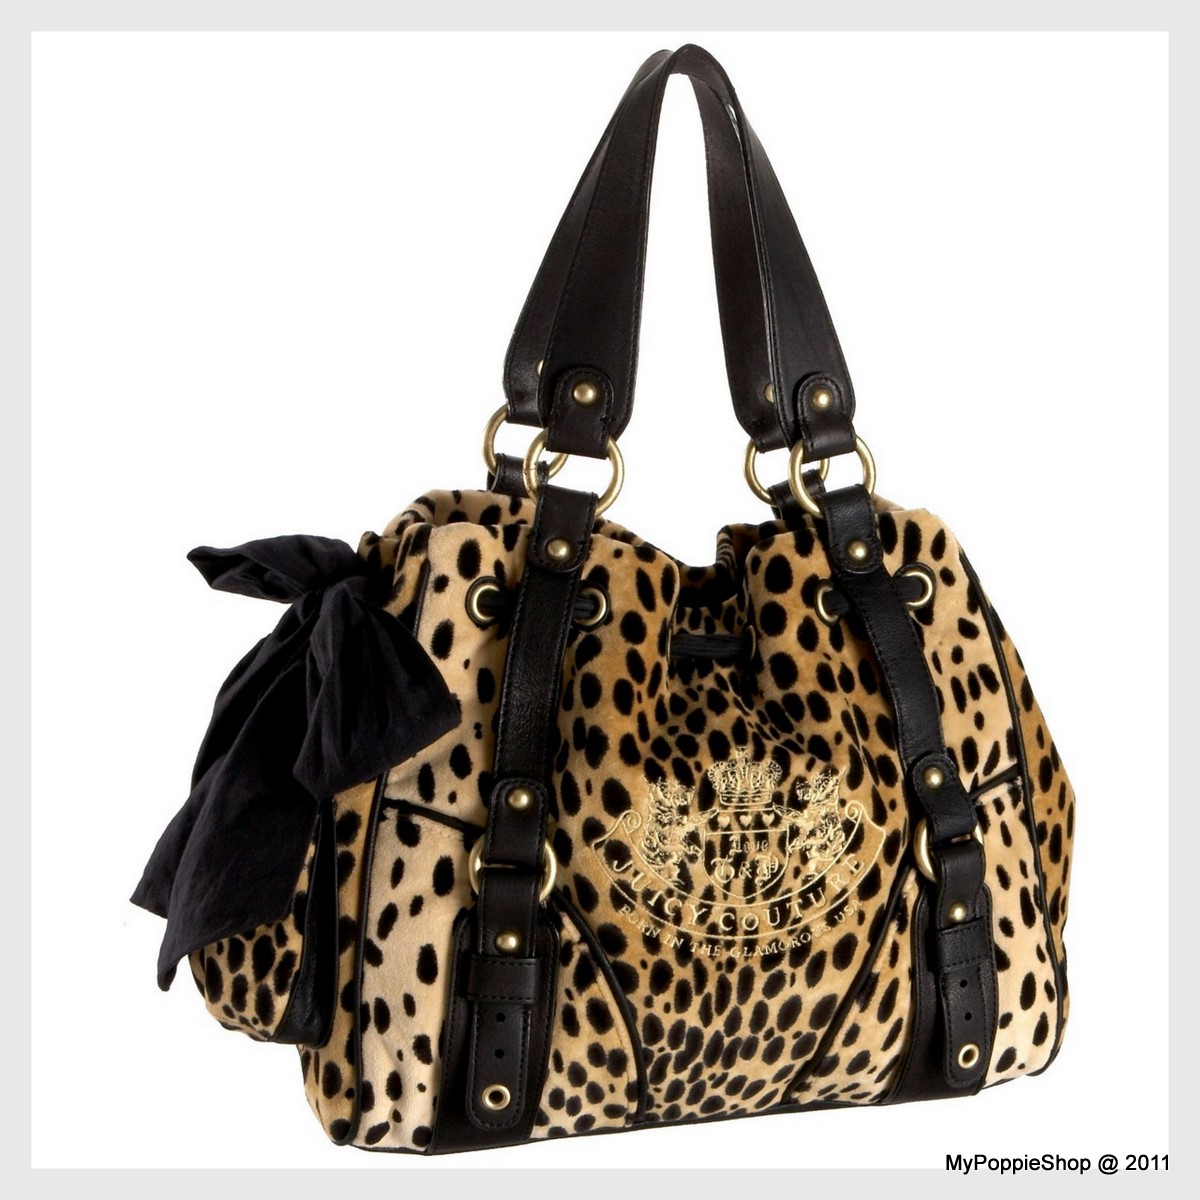 My Poppie Shop - Great designer deals everyday!: Juicy Couture Cheetah ...